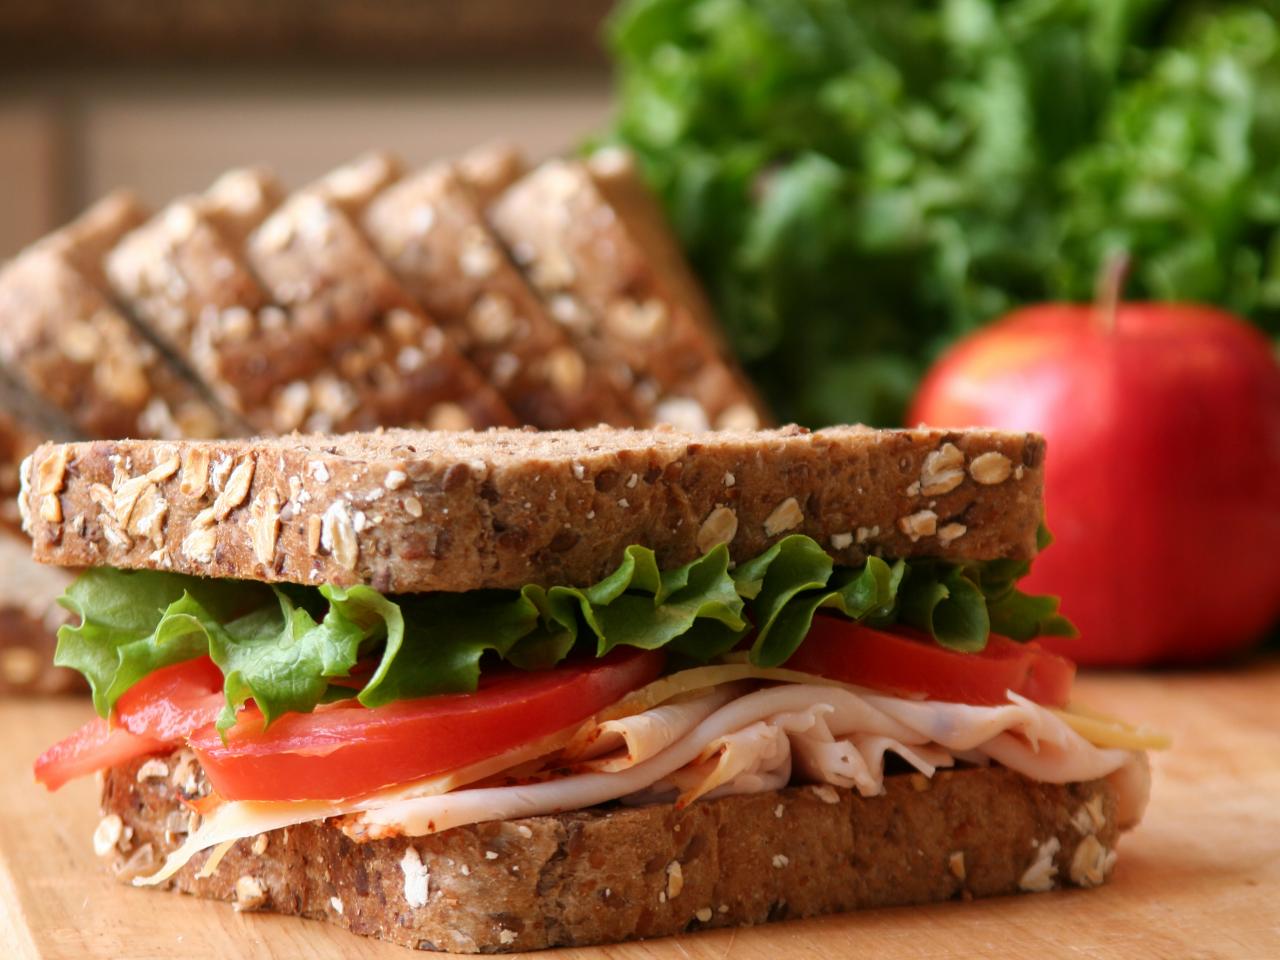 5 Sandwich Maker Options To Make Crispy Sandwiches - NDTV Food